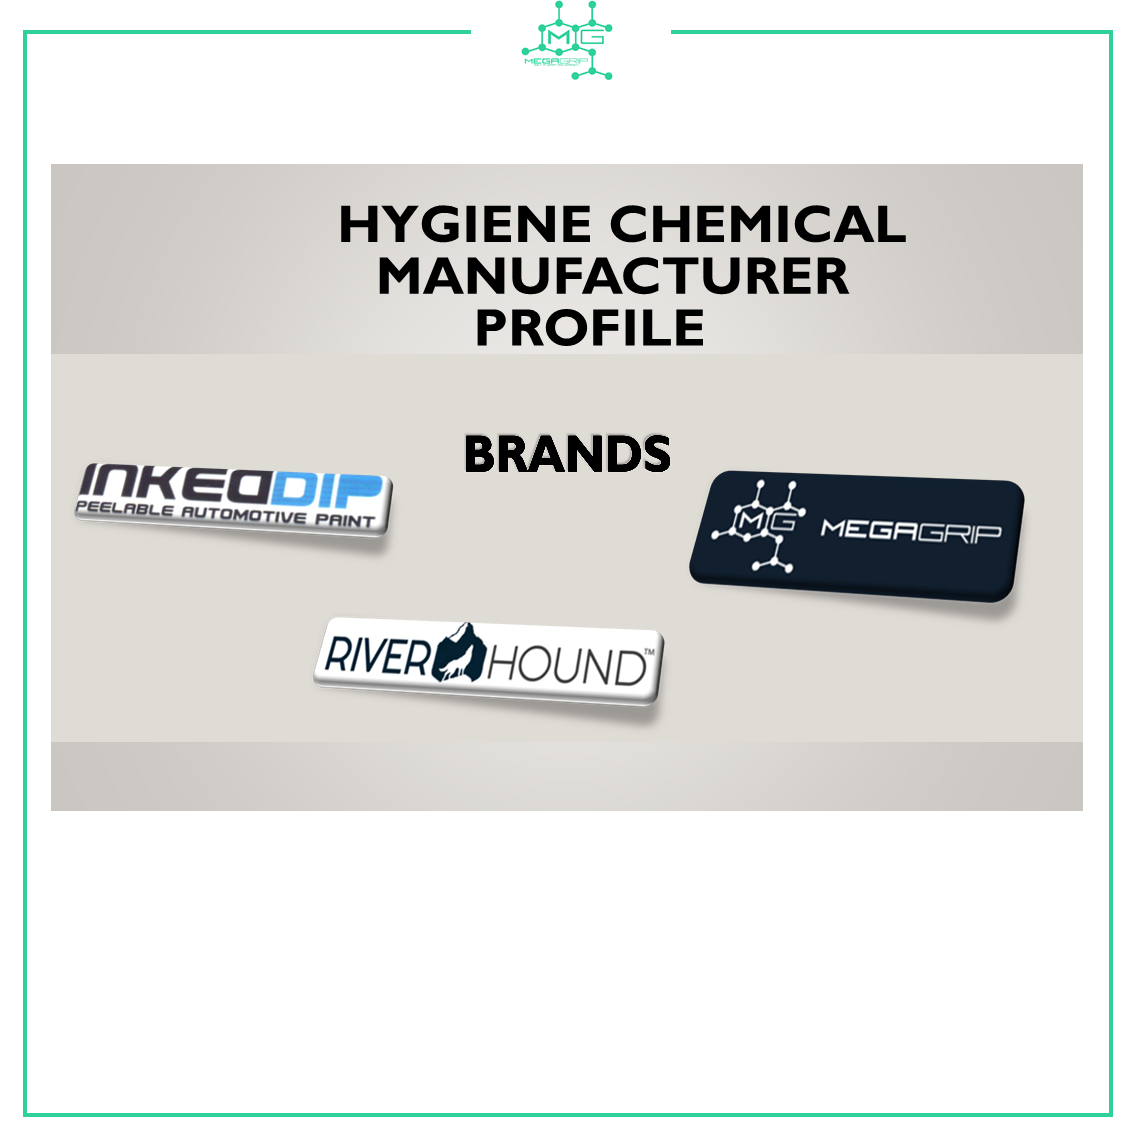 HYGIENE CHEMICALS - Catalogue Catalogue